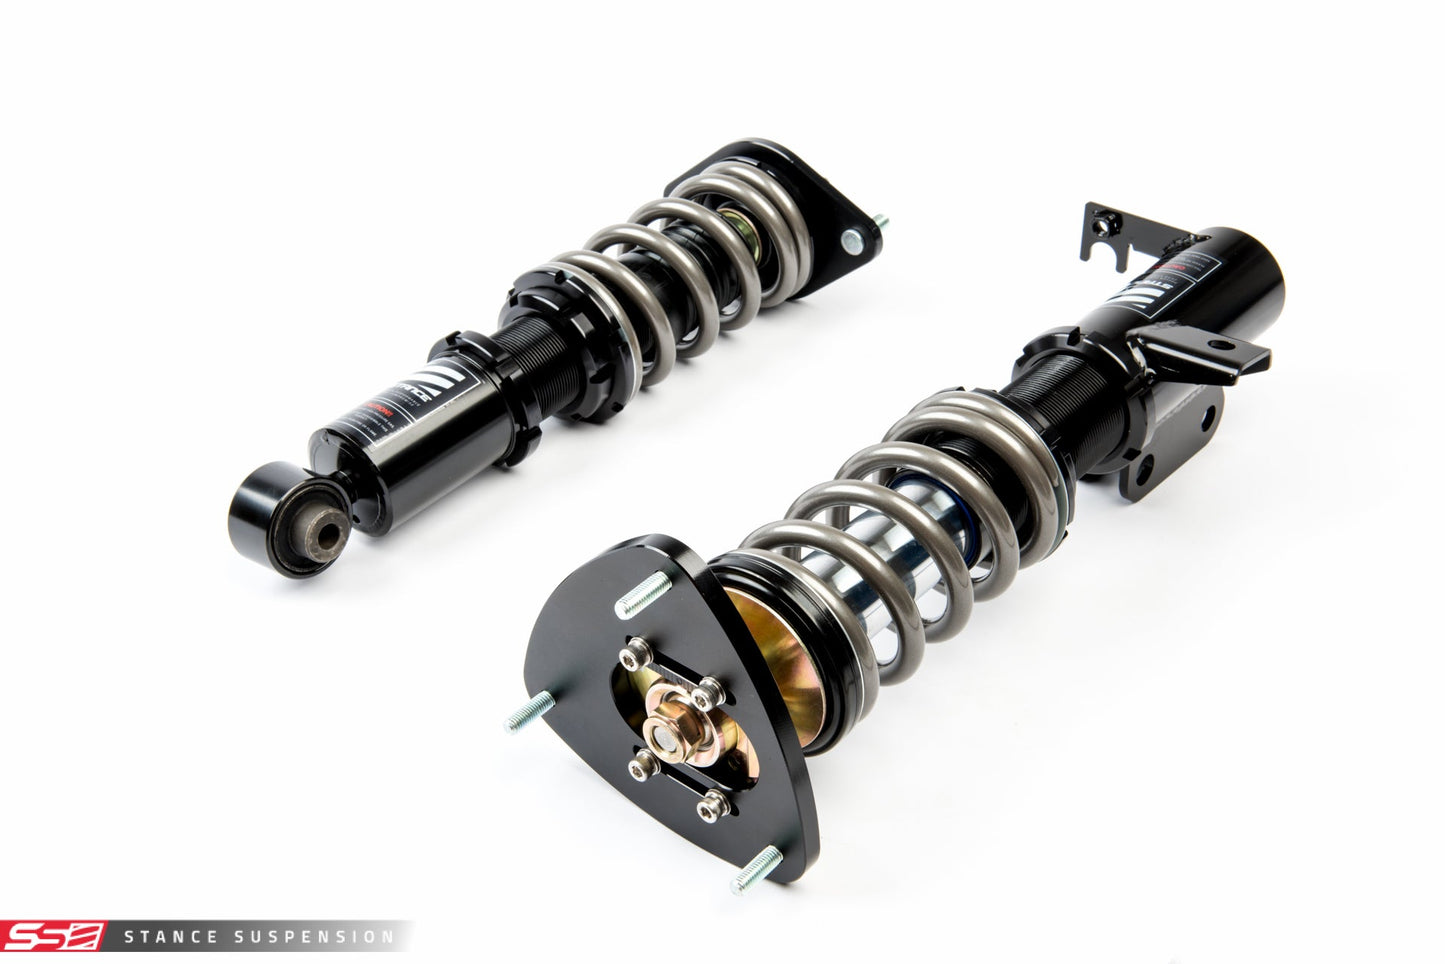 Suspensão Stance - Coilovers XR1 para 13+ Scion FR-S / Subaru BRZ / Toyota GT86 ZN6 (ST-ZN6-XR1)